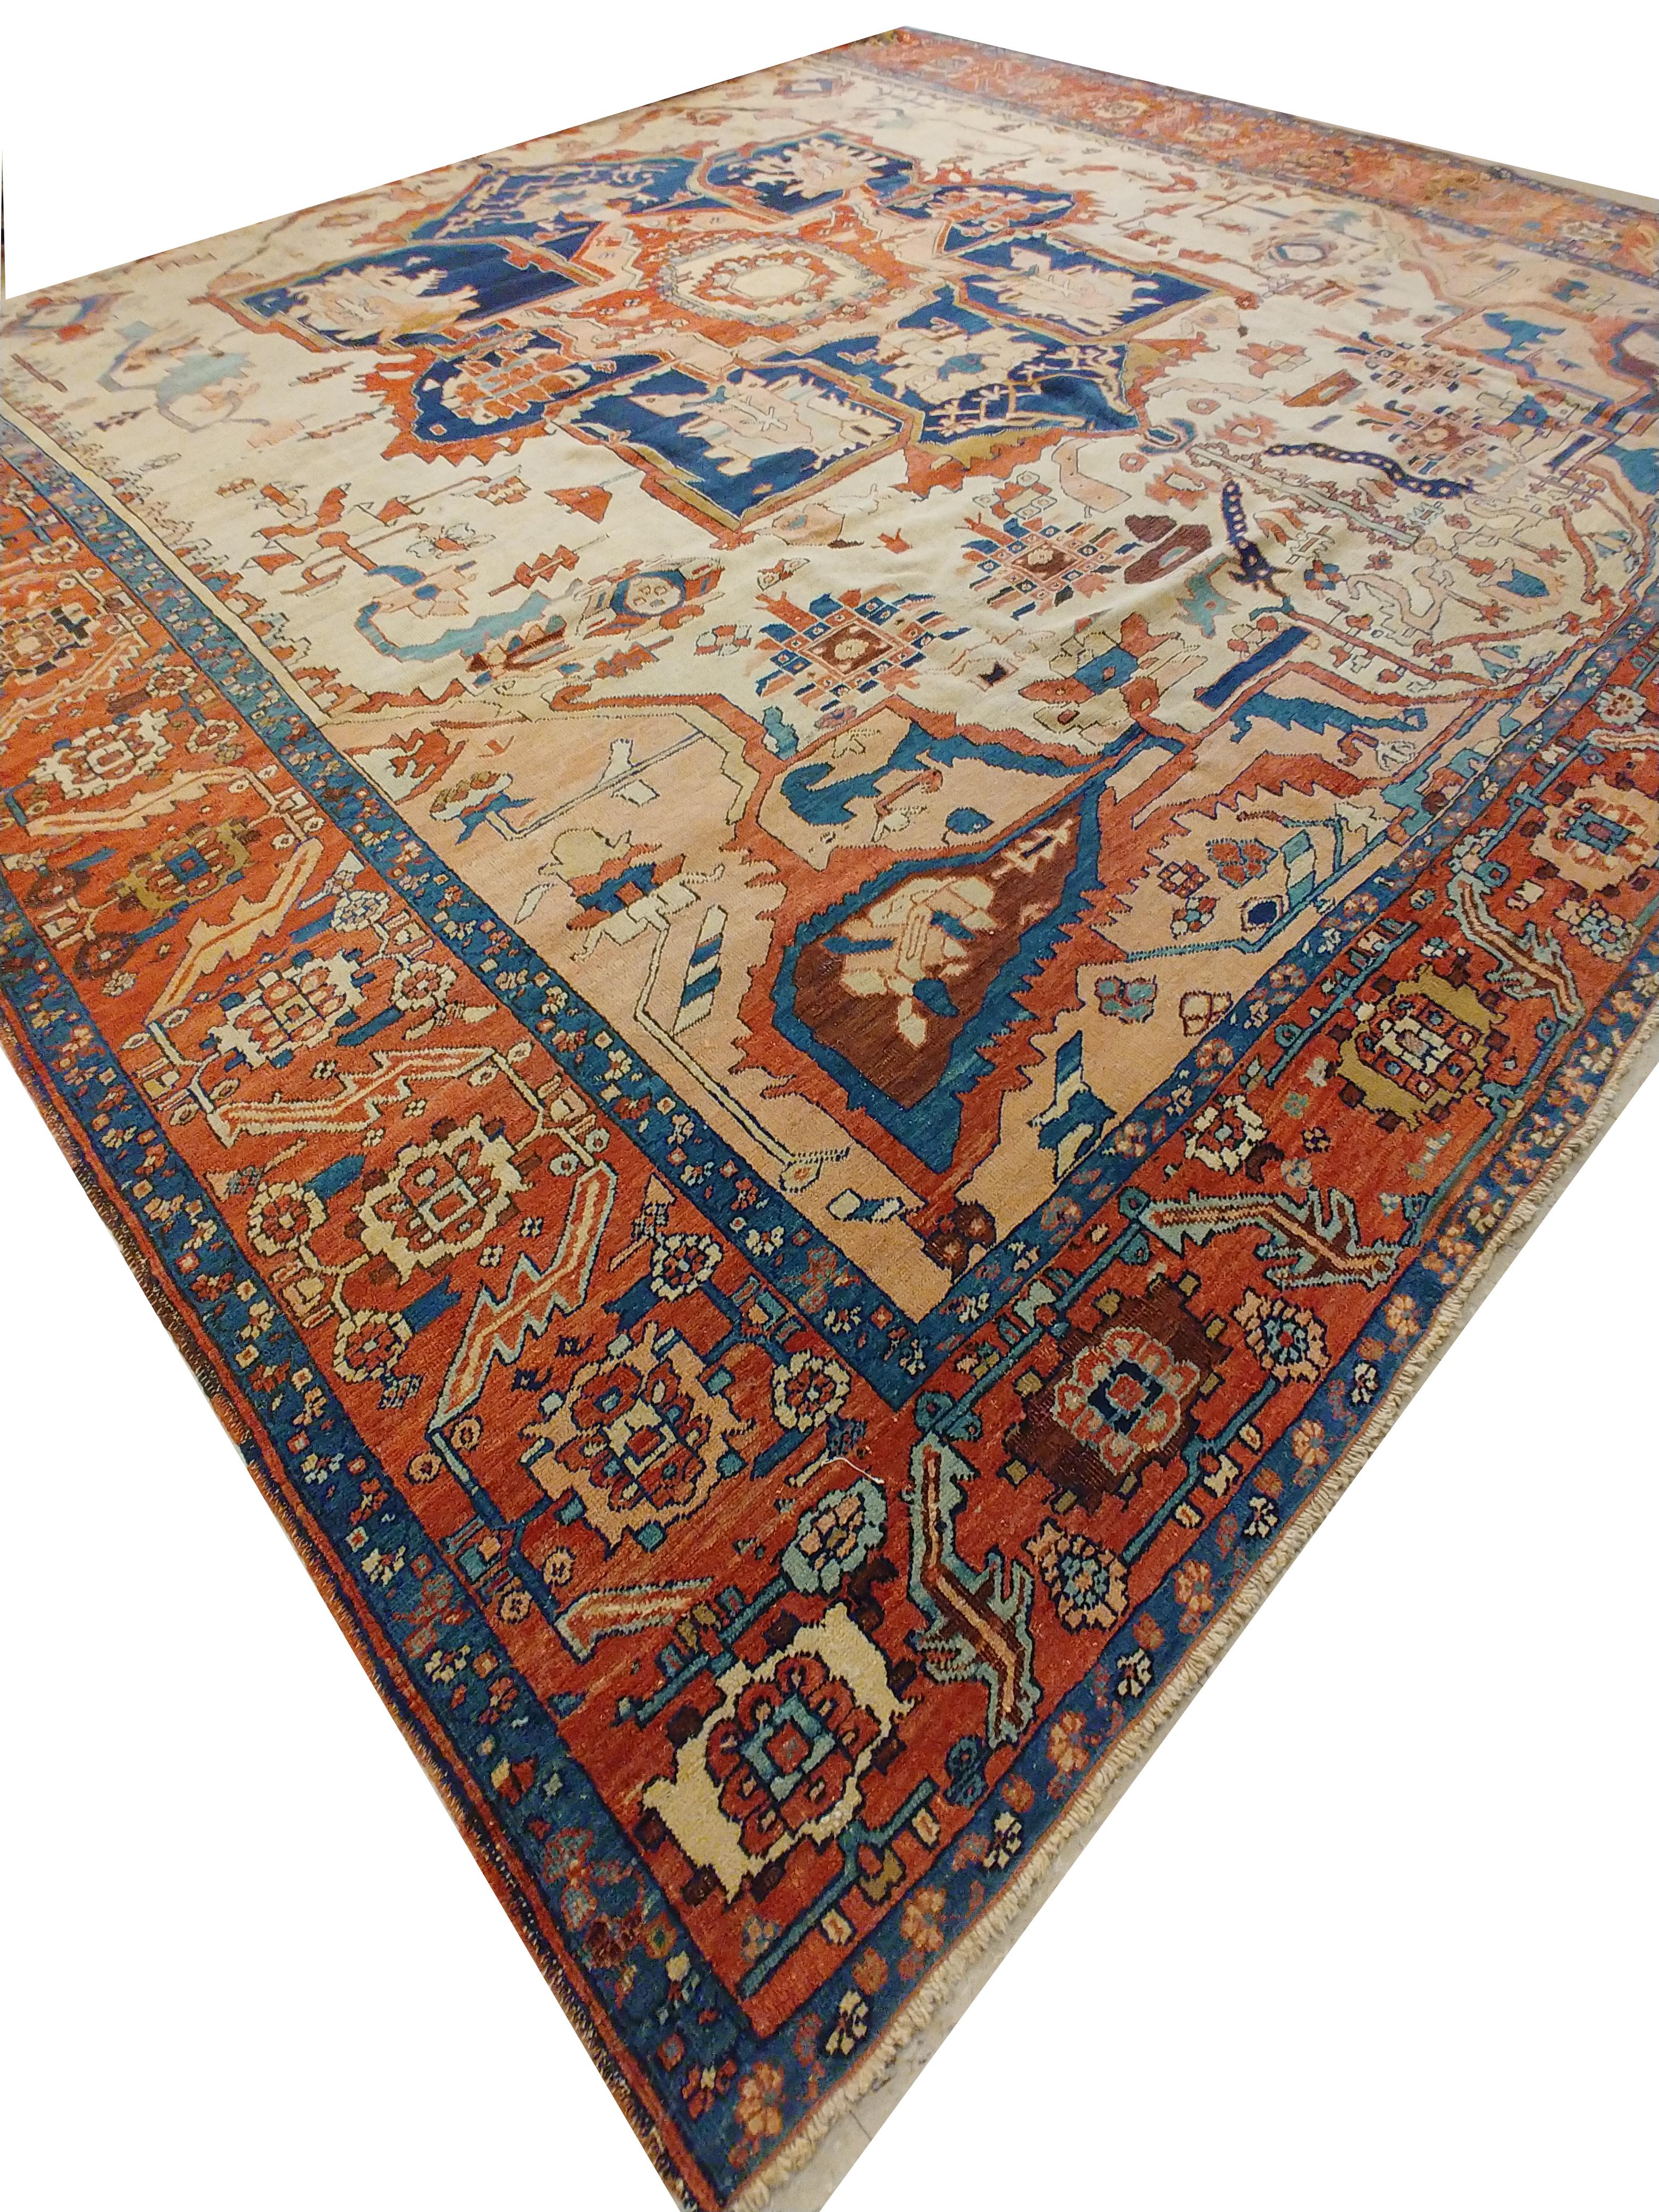 Antique Serapi Carpet, Handmade Wool Oriental Rug, Ivory, Rust, Navy, Light Blue For Sale 2